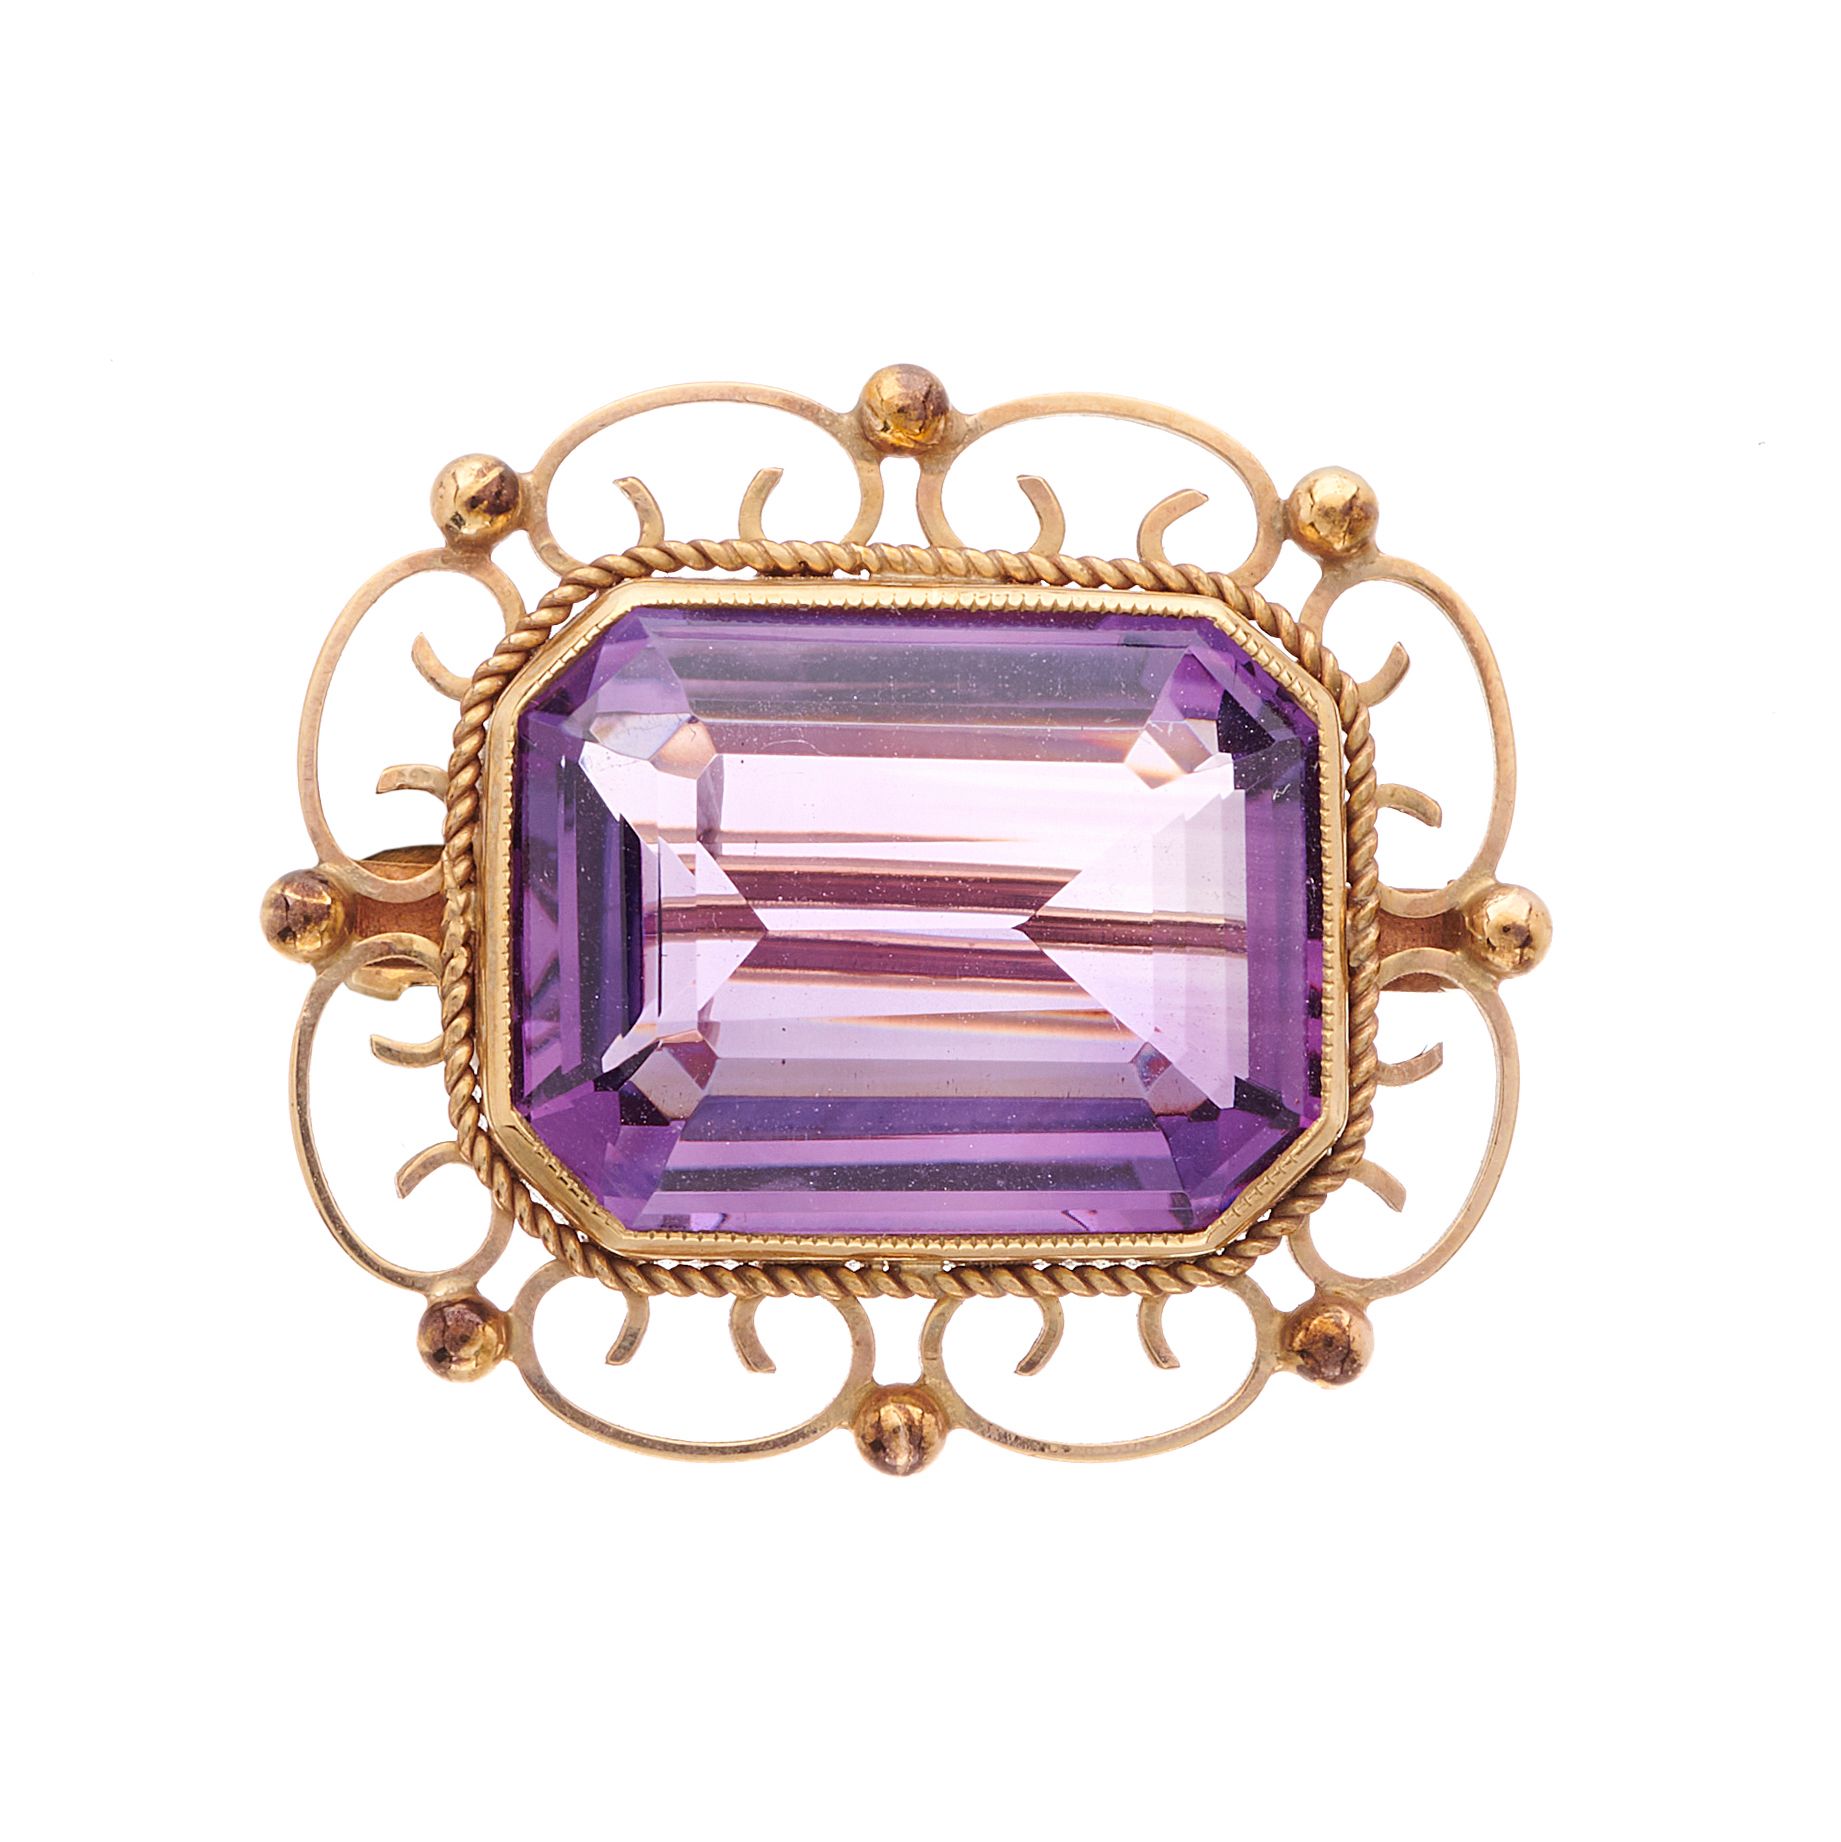 Null 一枚20世纪中期的9K金长方形紫水晶胸针，周围有镂空的珠子，紫水晶估计重量为17克拉，有爱丁堡1965年的印记，长3厘米，重9.3克 - 总体状况良好&hellip;